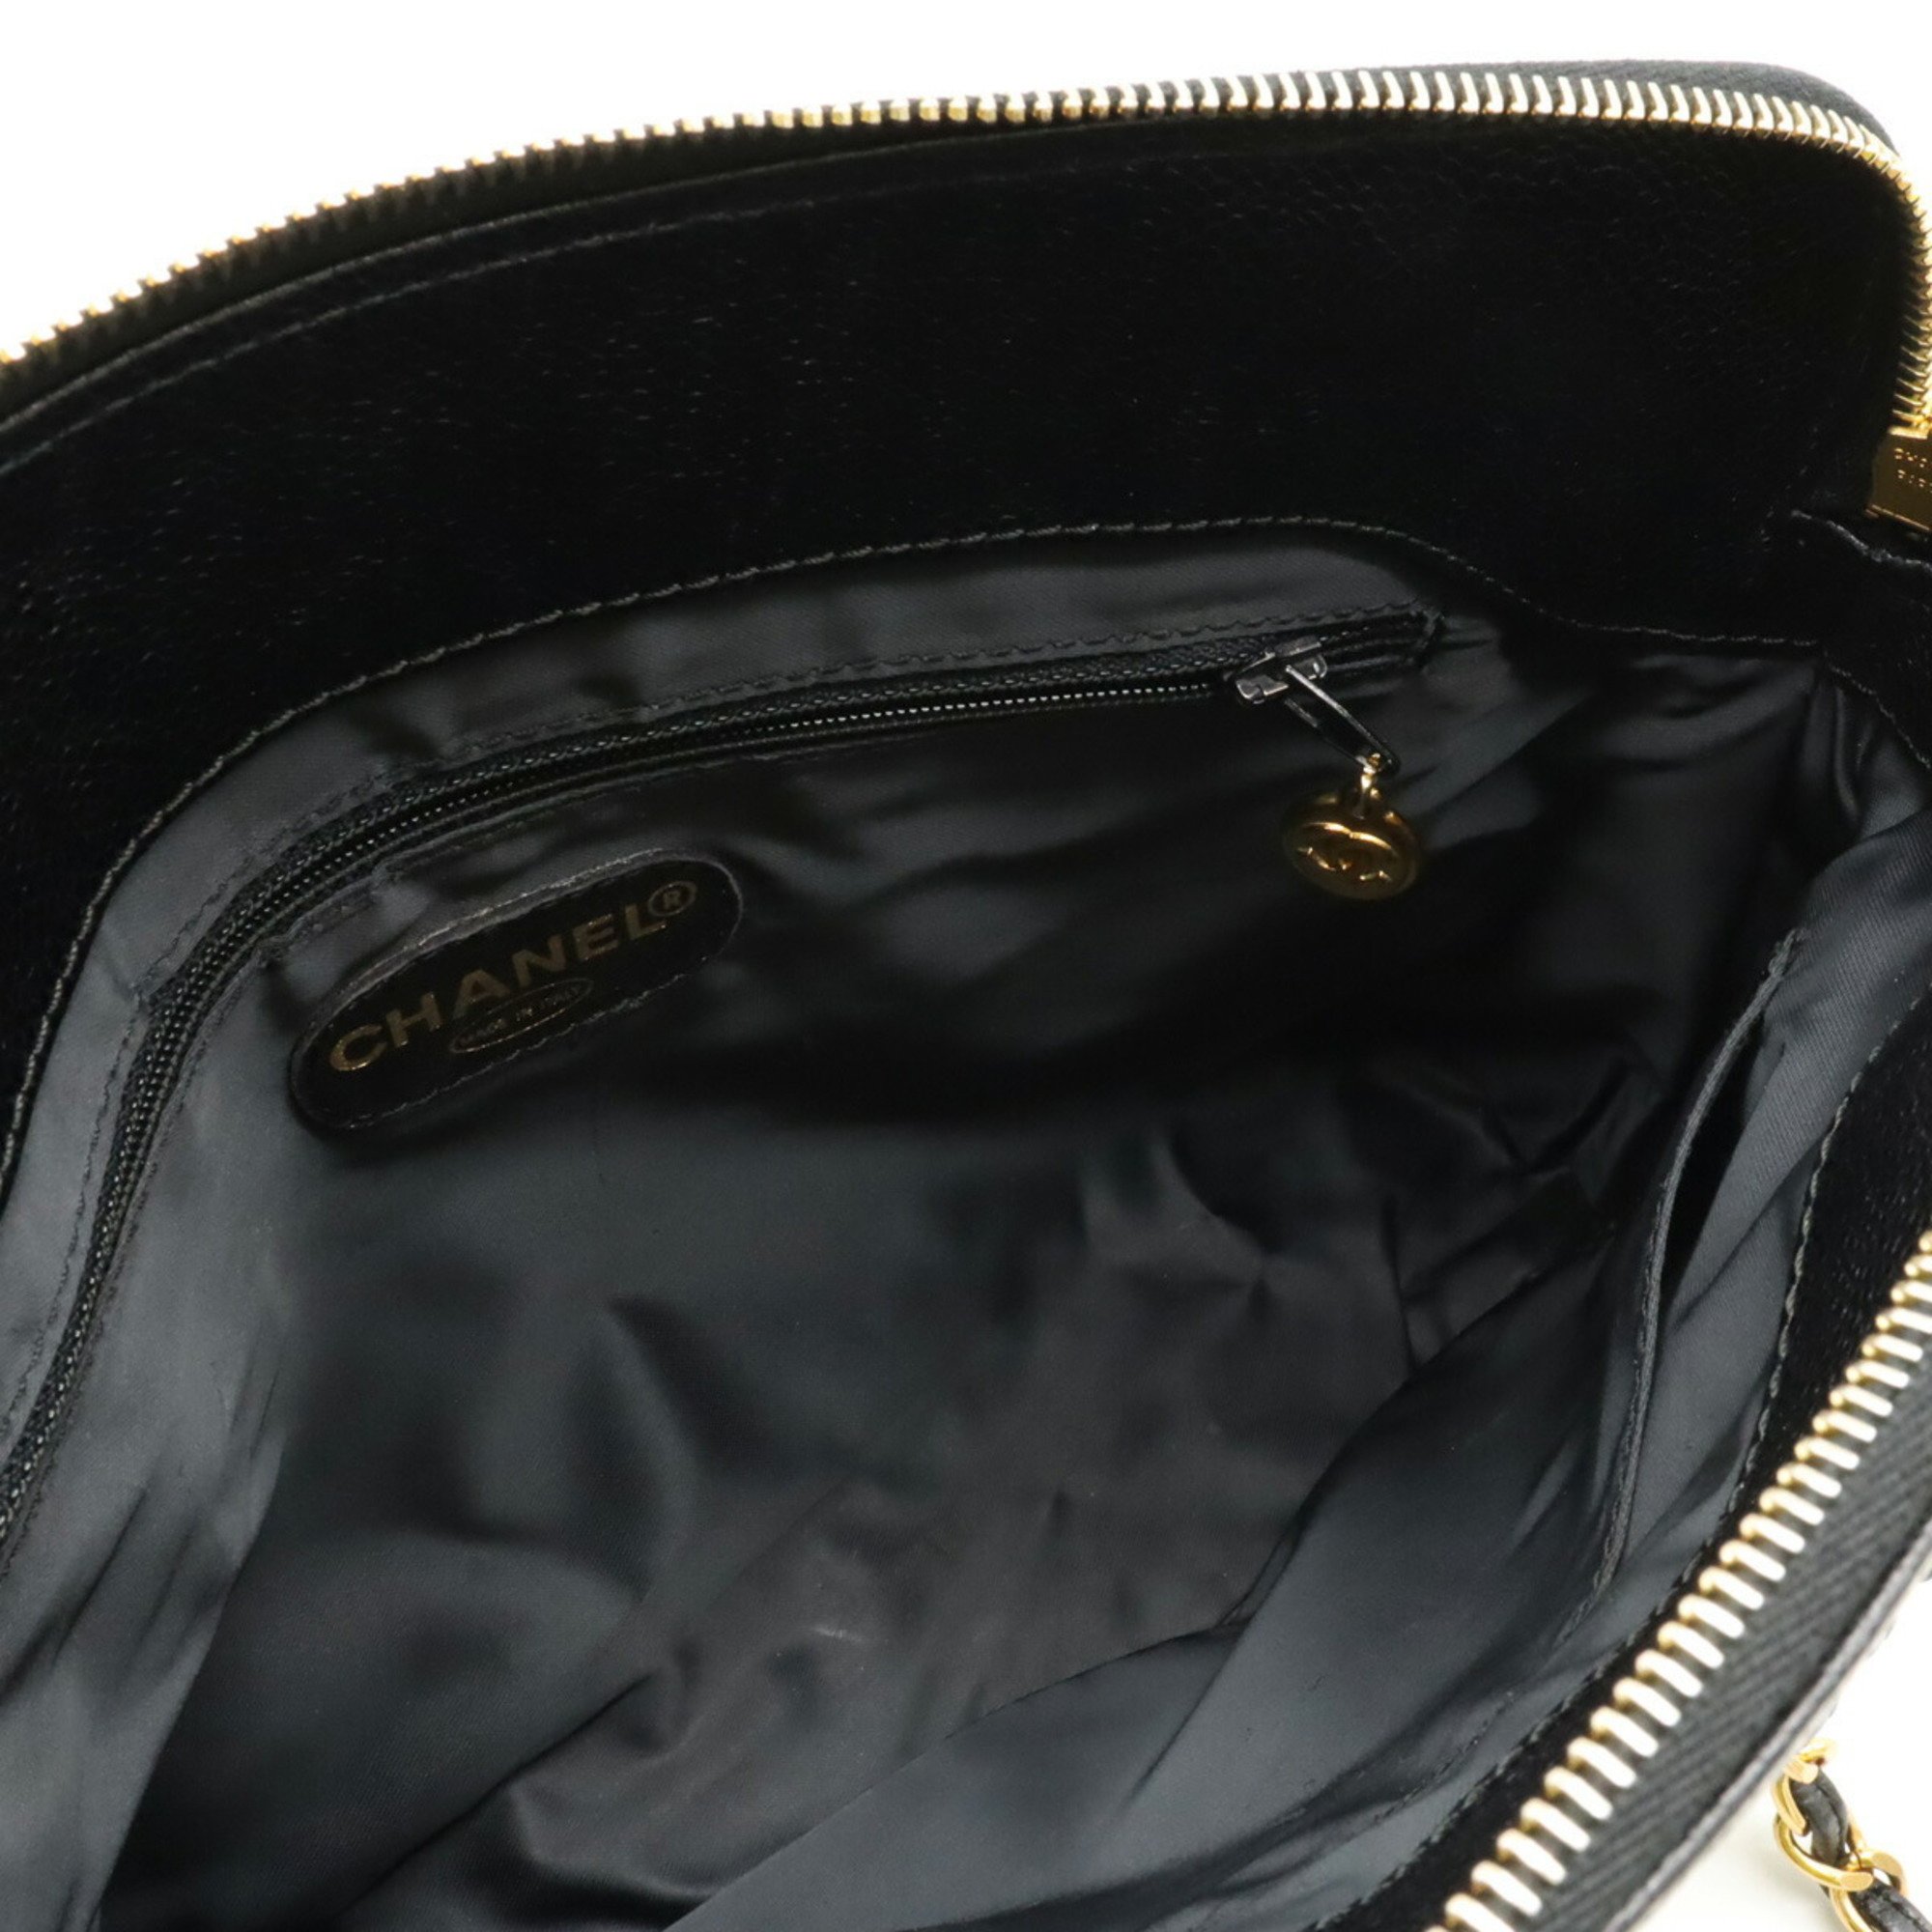 CHANEL Coco Mark Chain Tote Bag Shoulder Caviar Skin Leather Black A08904